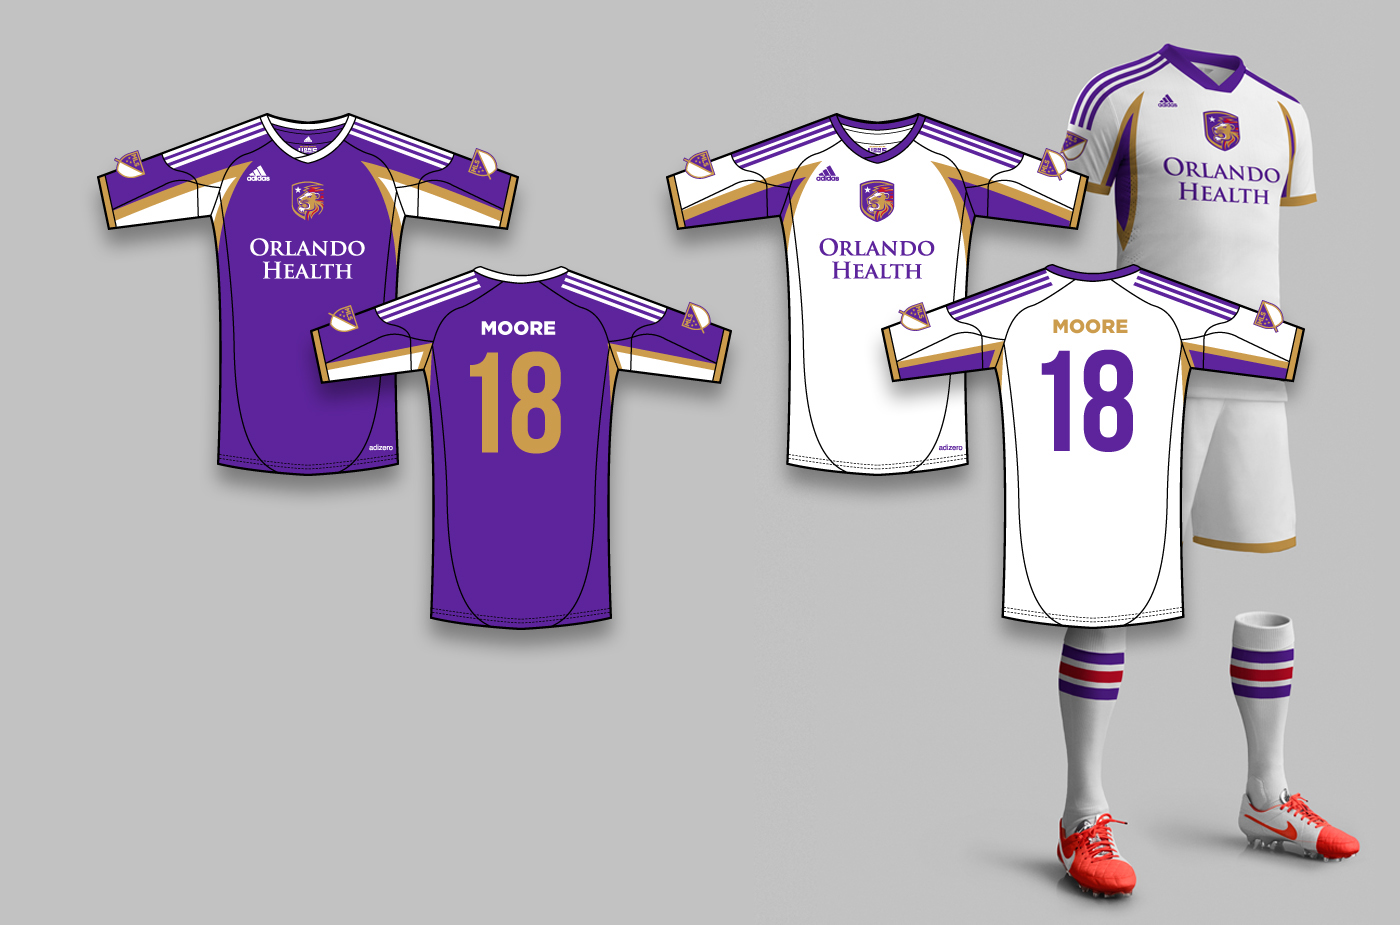 orlando football soccer mls Lions purple florida sports logo brand identity jersey uniform